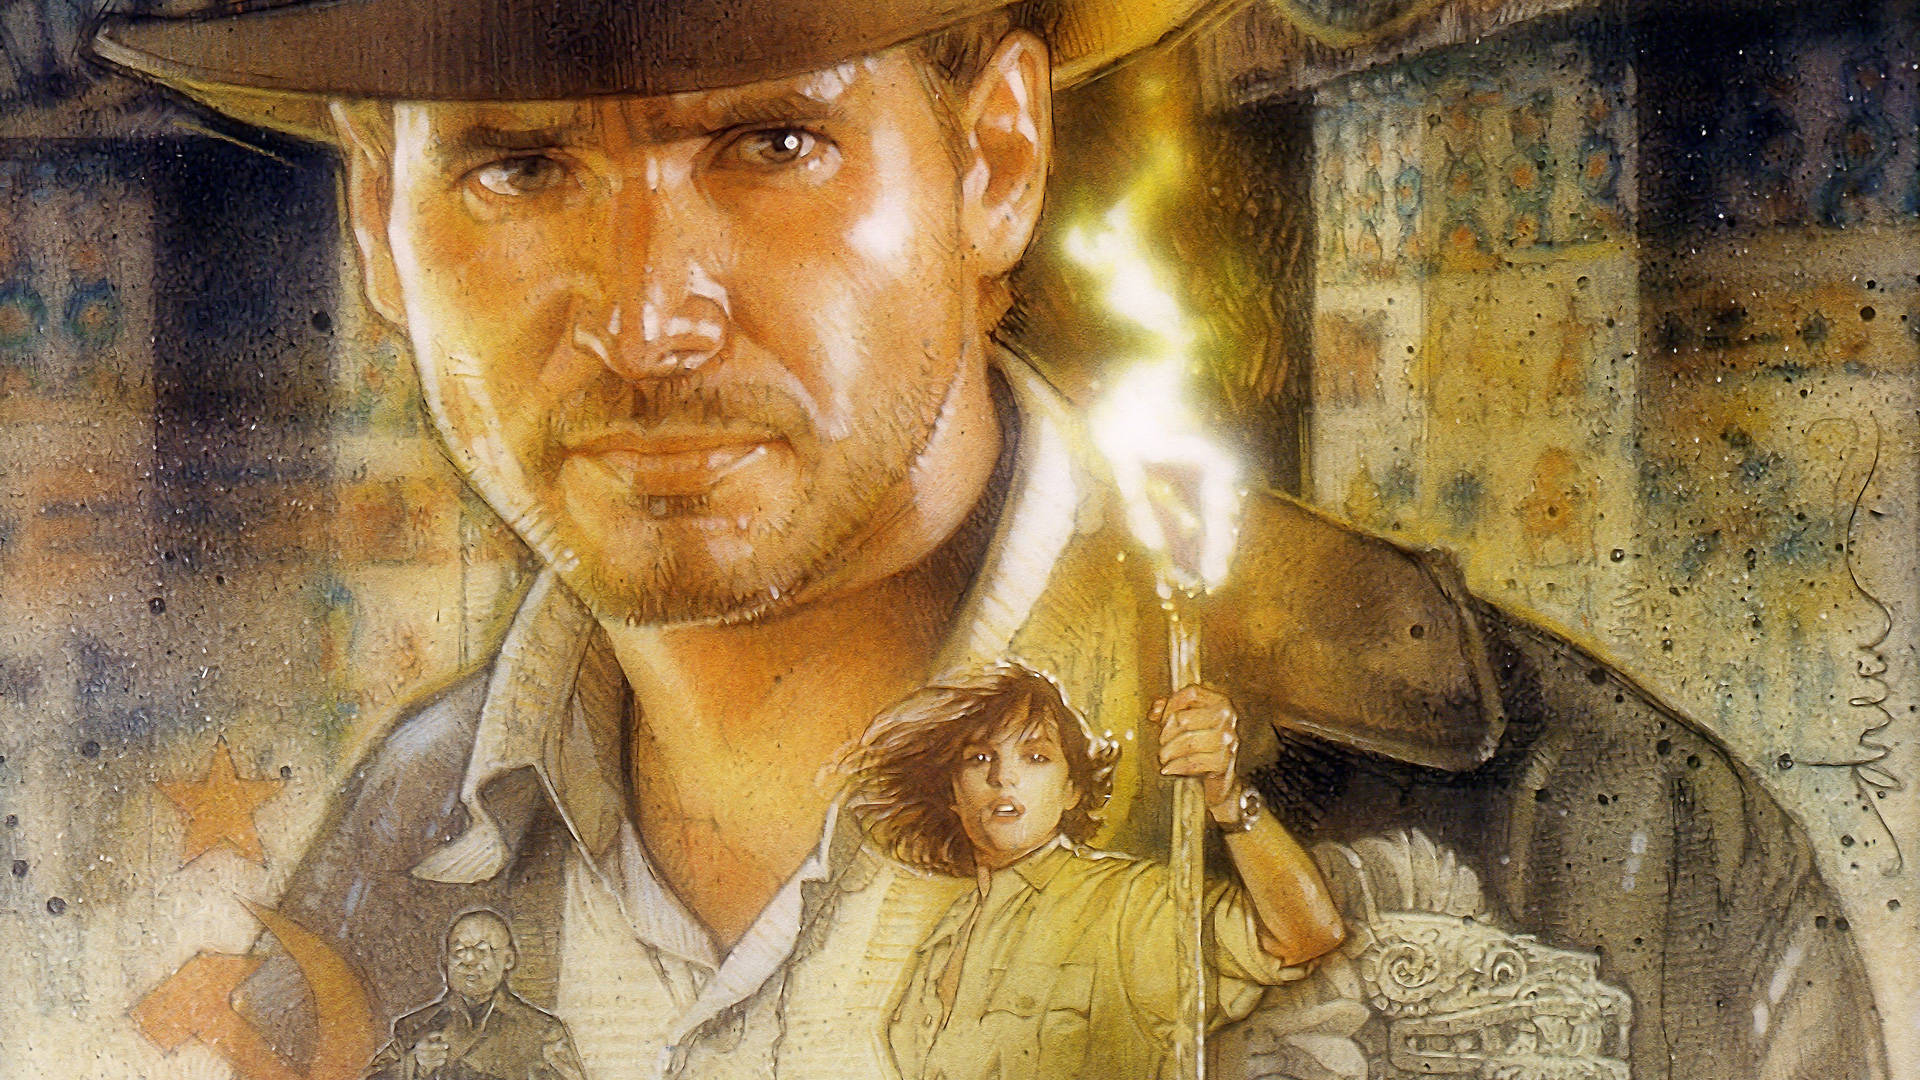 Top 999+ Indiana Jones Wallpaper Full HD, 4K Free to Use